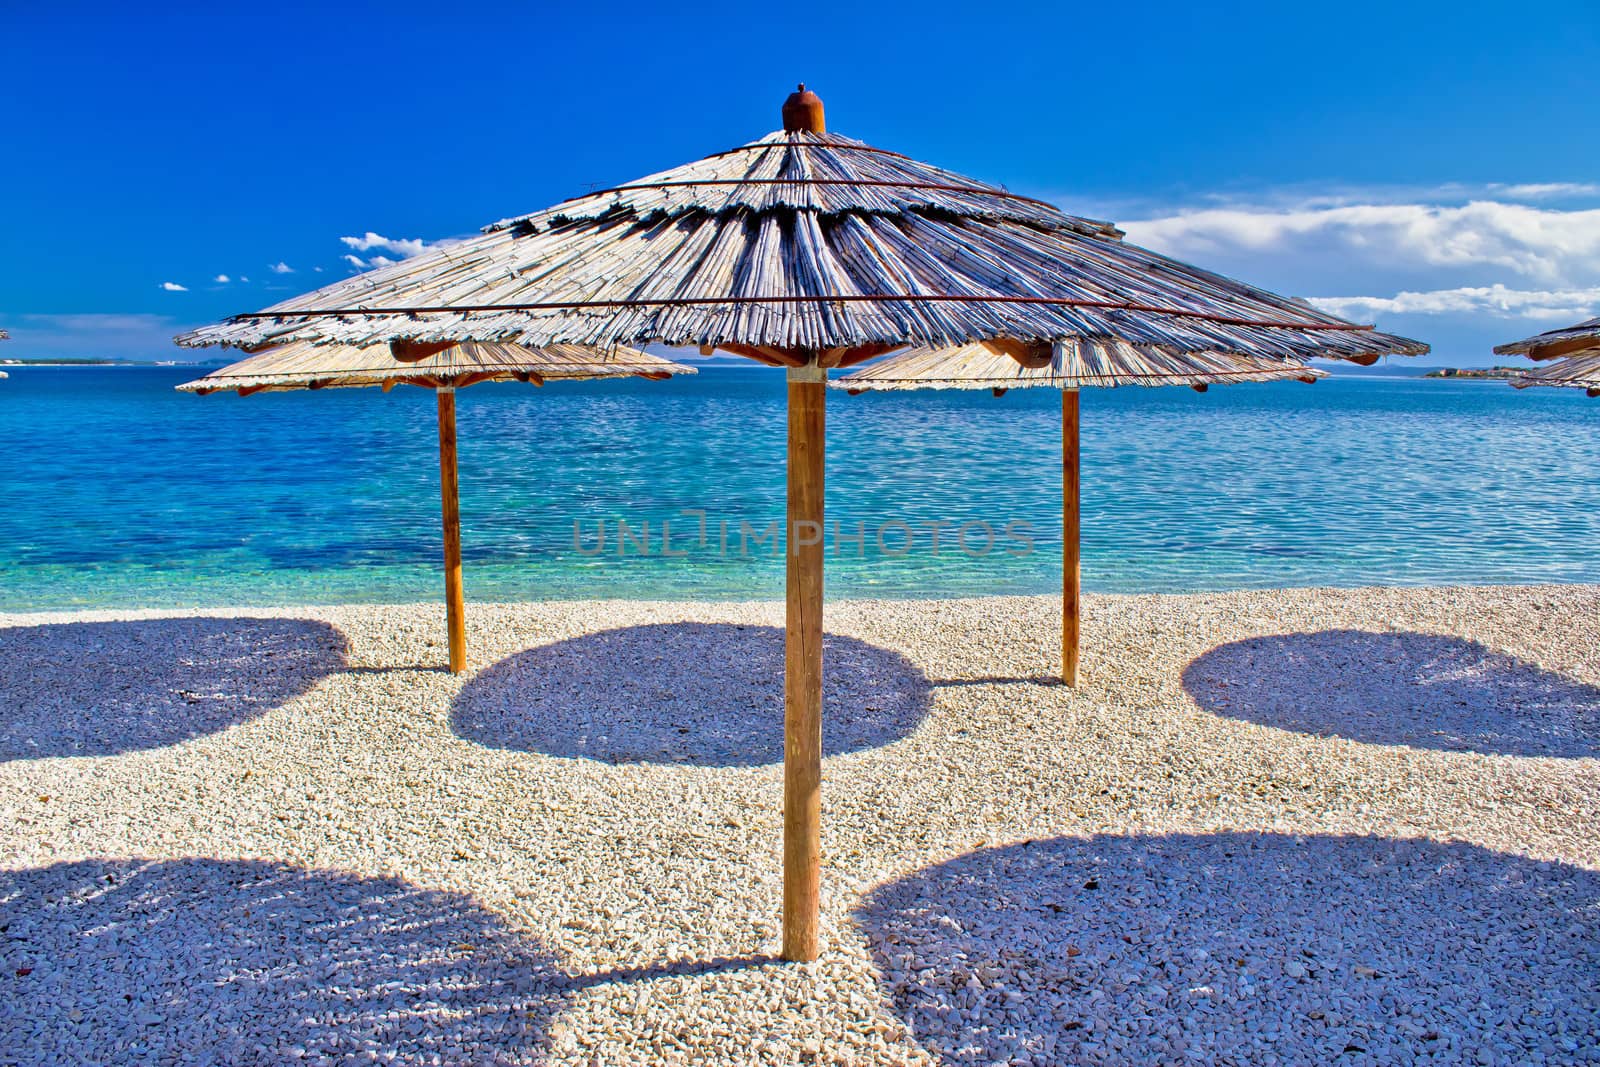 Pebble beach and turquoise sea umbrella, Zrce beach, Island of Pag, Croatia